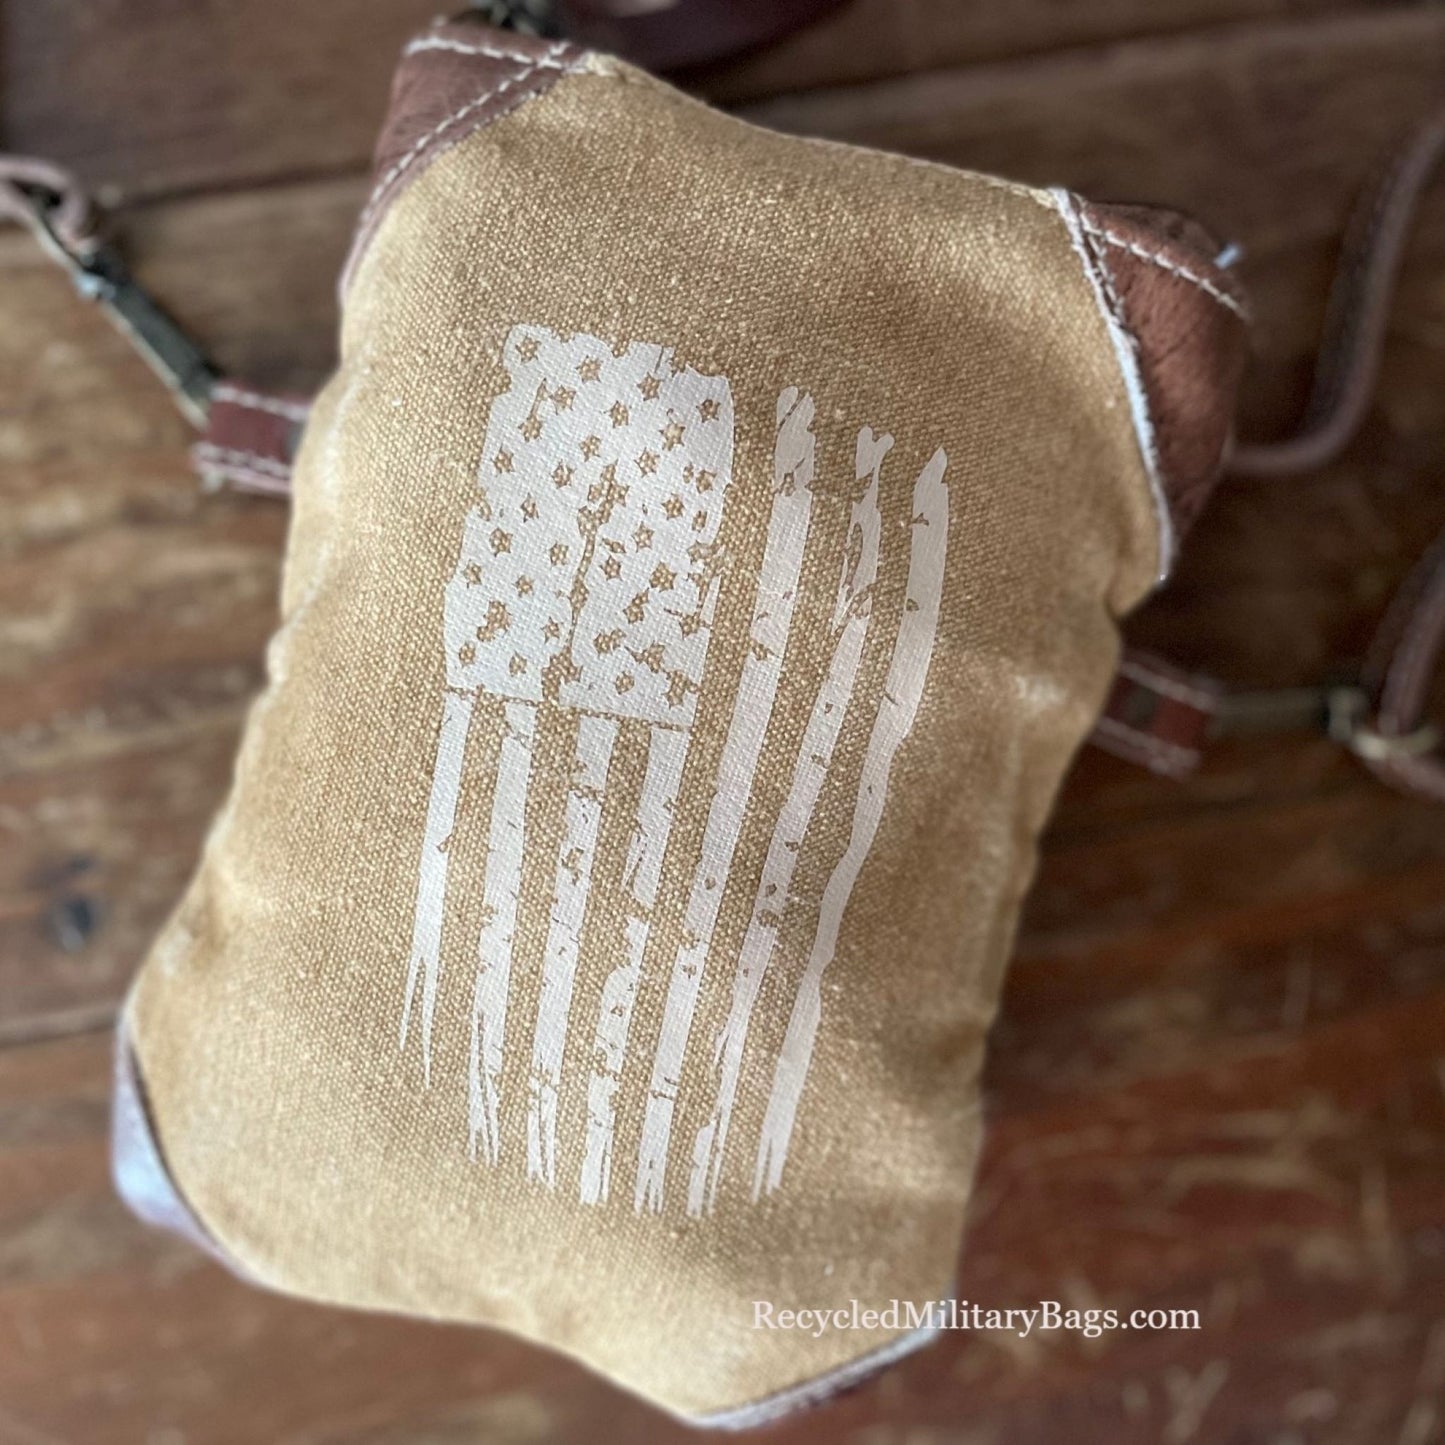 US Flag Travel, Festival or Small Patriotic Passport Crossbody Bag